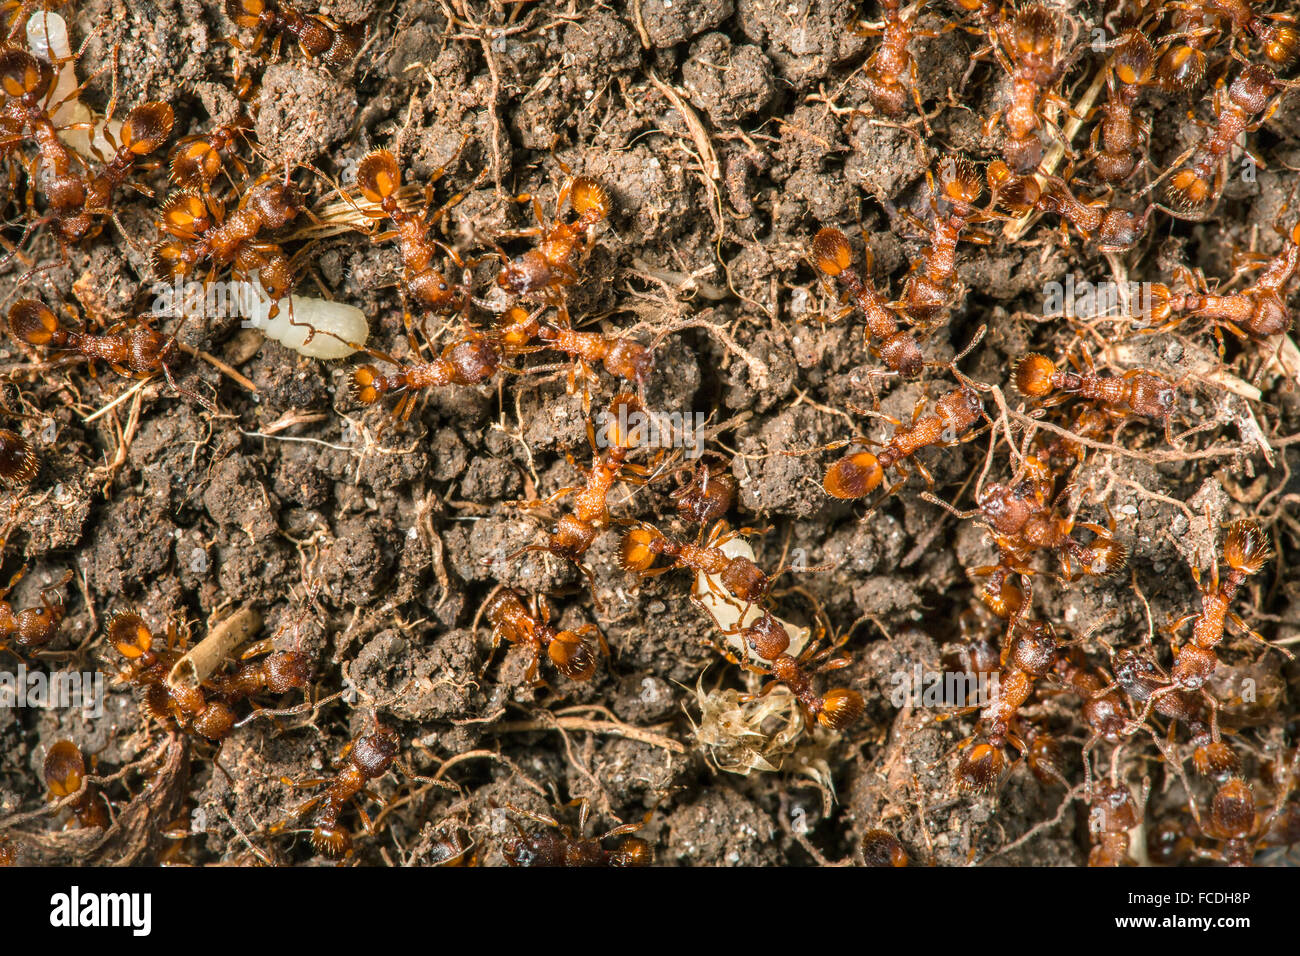 Netherlands, Den Bosch, nature reserve called Moerputten. Common elbowed red ants transporting larva. Peat bogs. Stock Photo